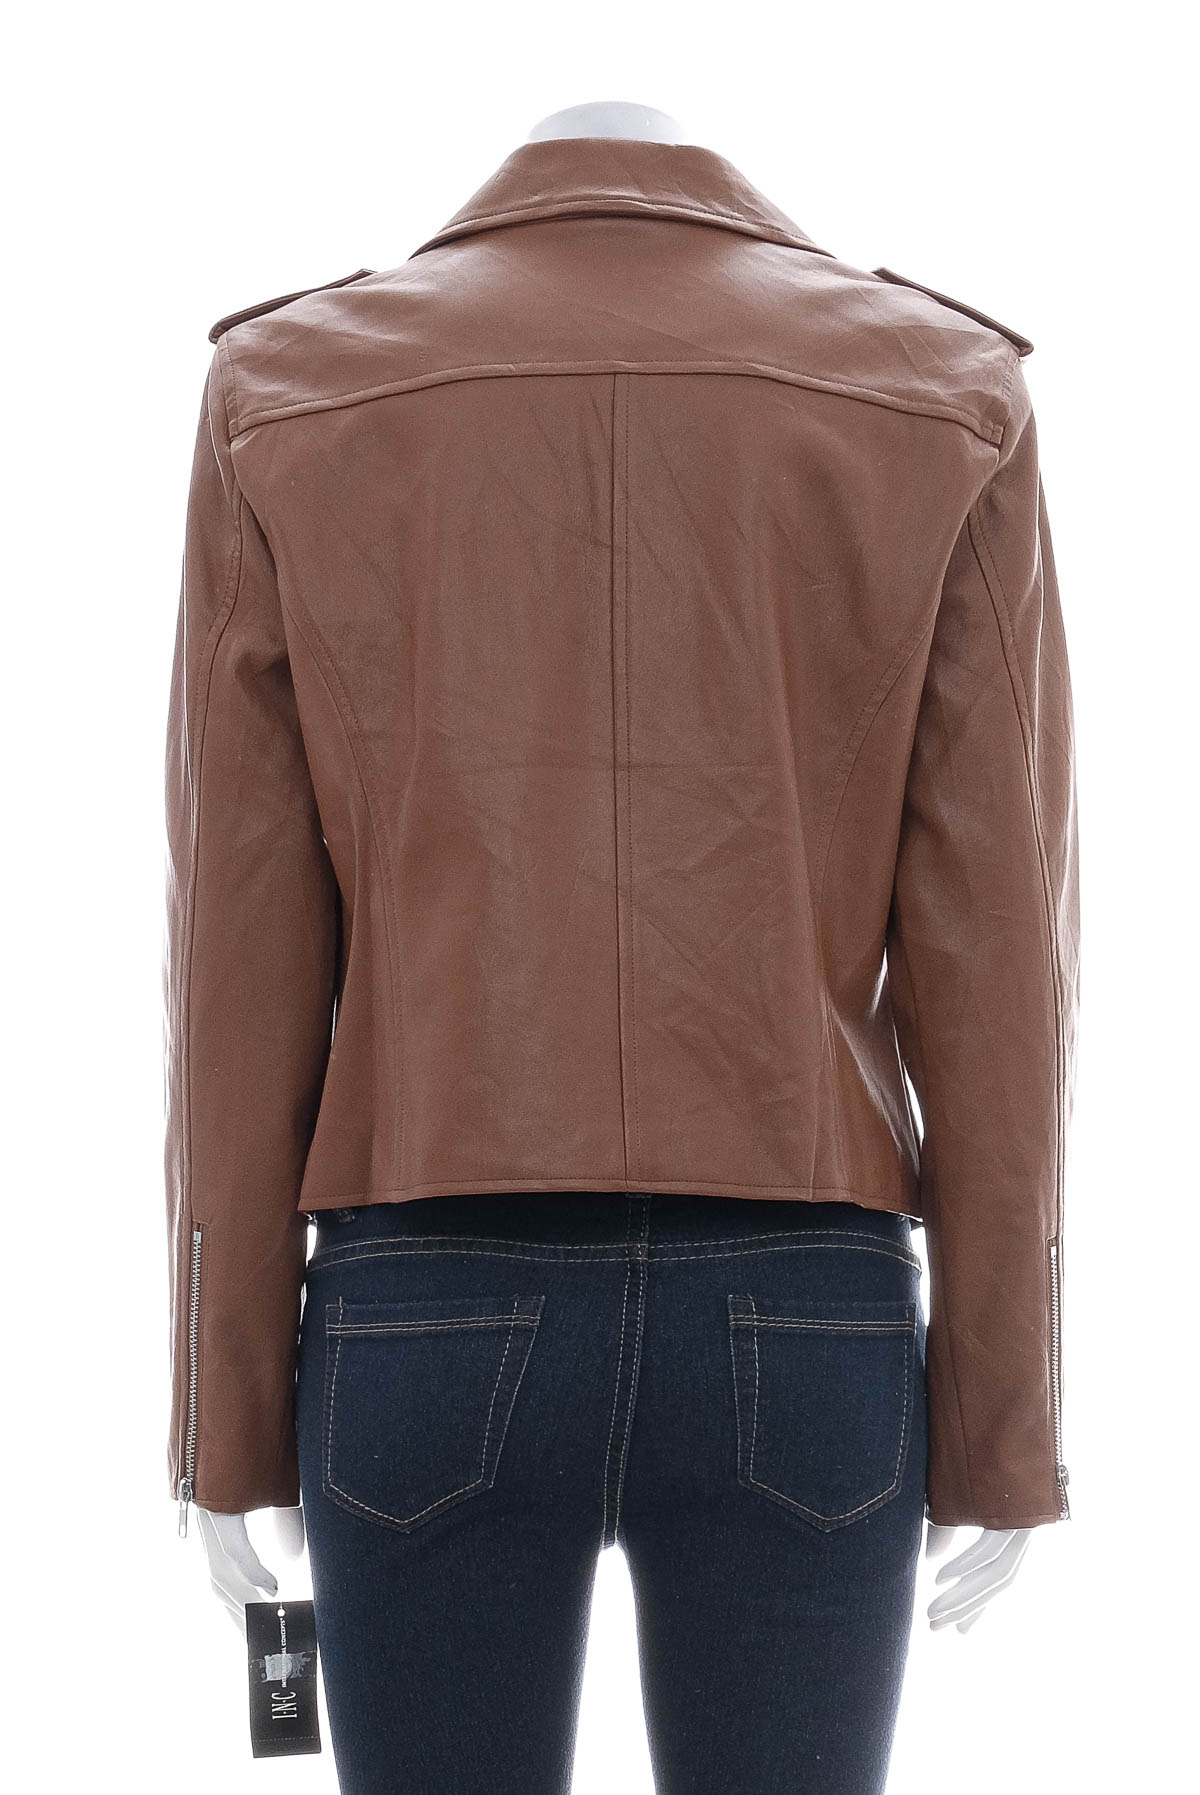 Women's leather jacket - I.n.c - International Concepts - 1